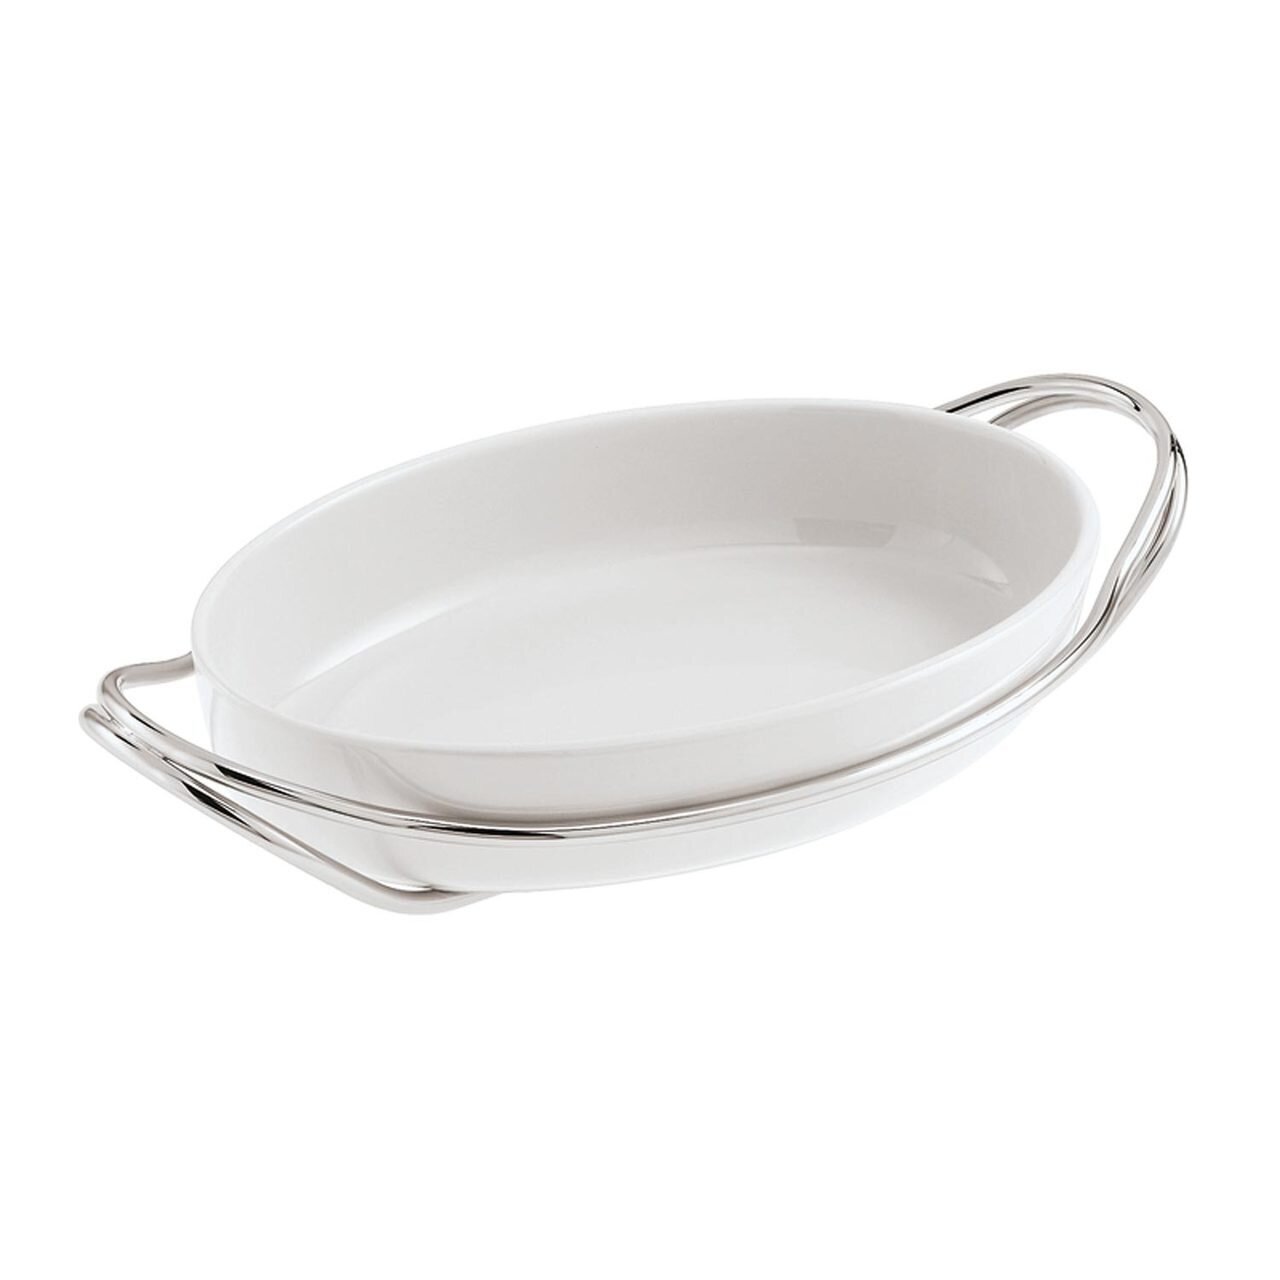 Sambonet New Living Oval Porcelain Dish Set 55401L39